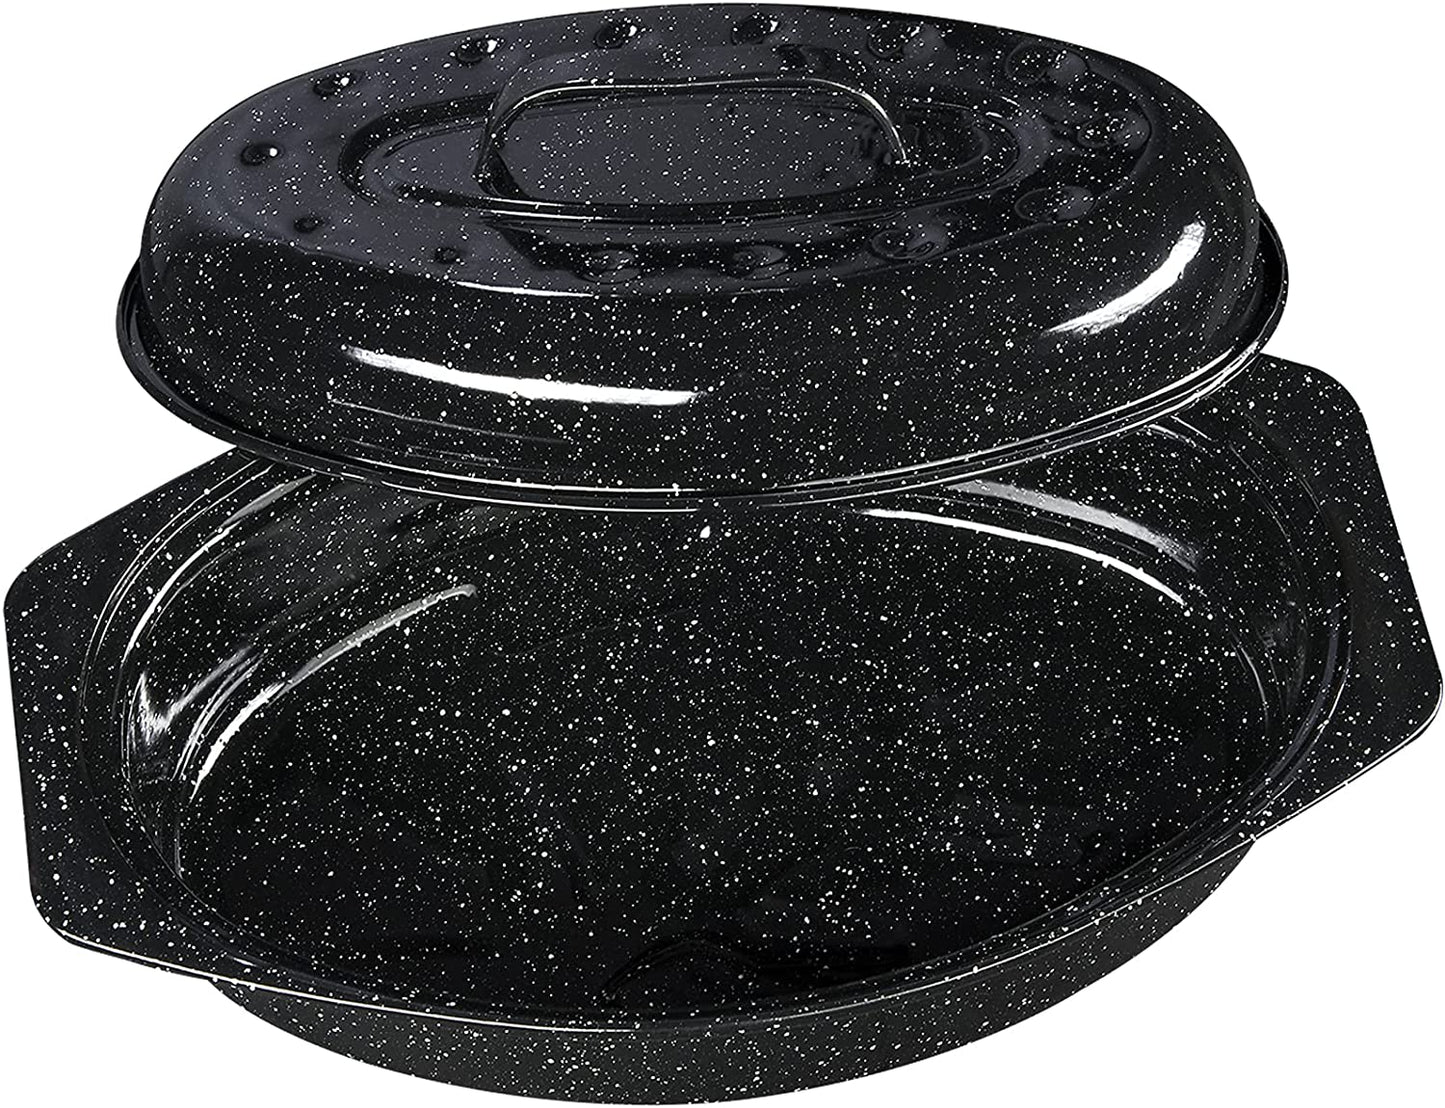 Granite Ware 7 lb. Capacity 13 in. Covered Oval Roaster, Speckled Black Enamel on Steel